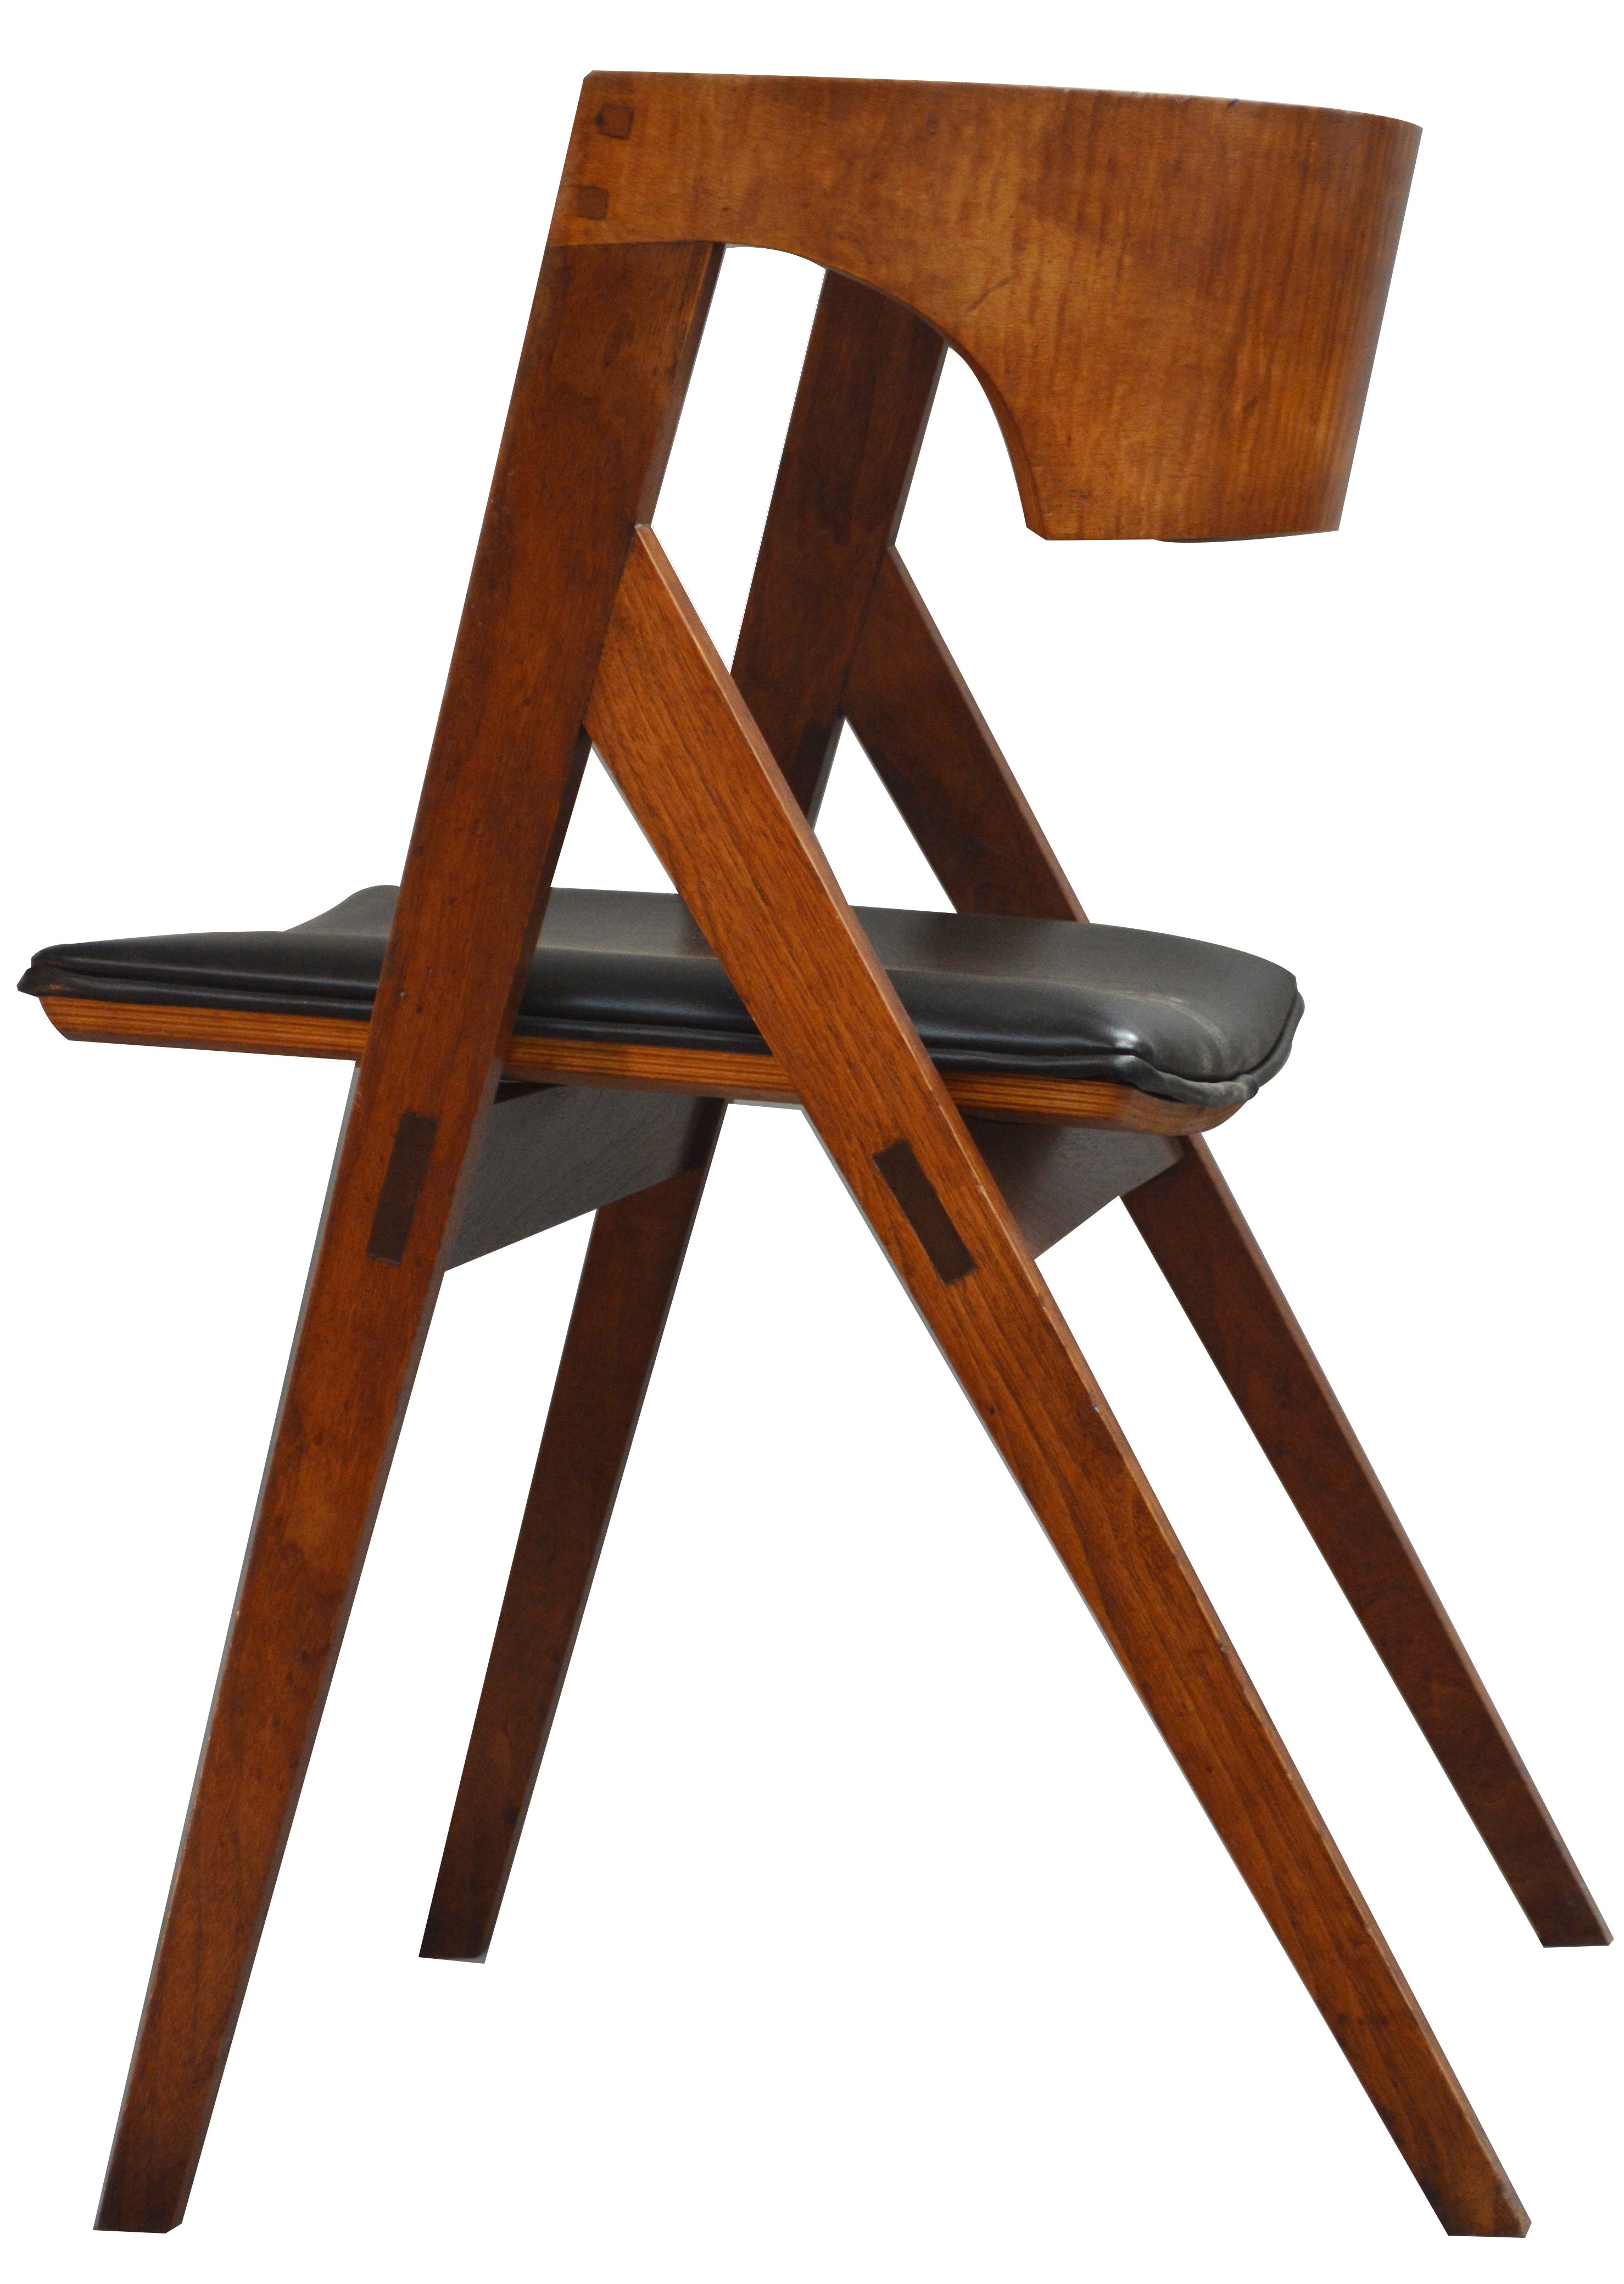 American Studio Craft Artist David N. Ebner's Dining Chair